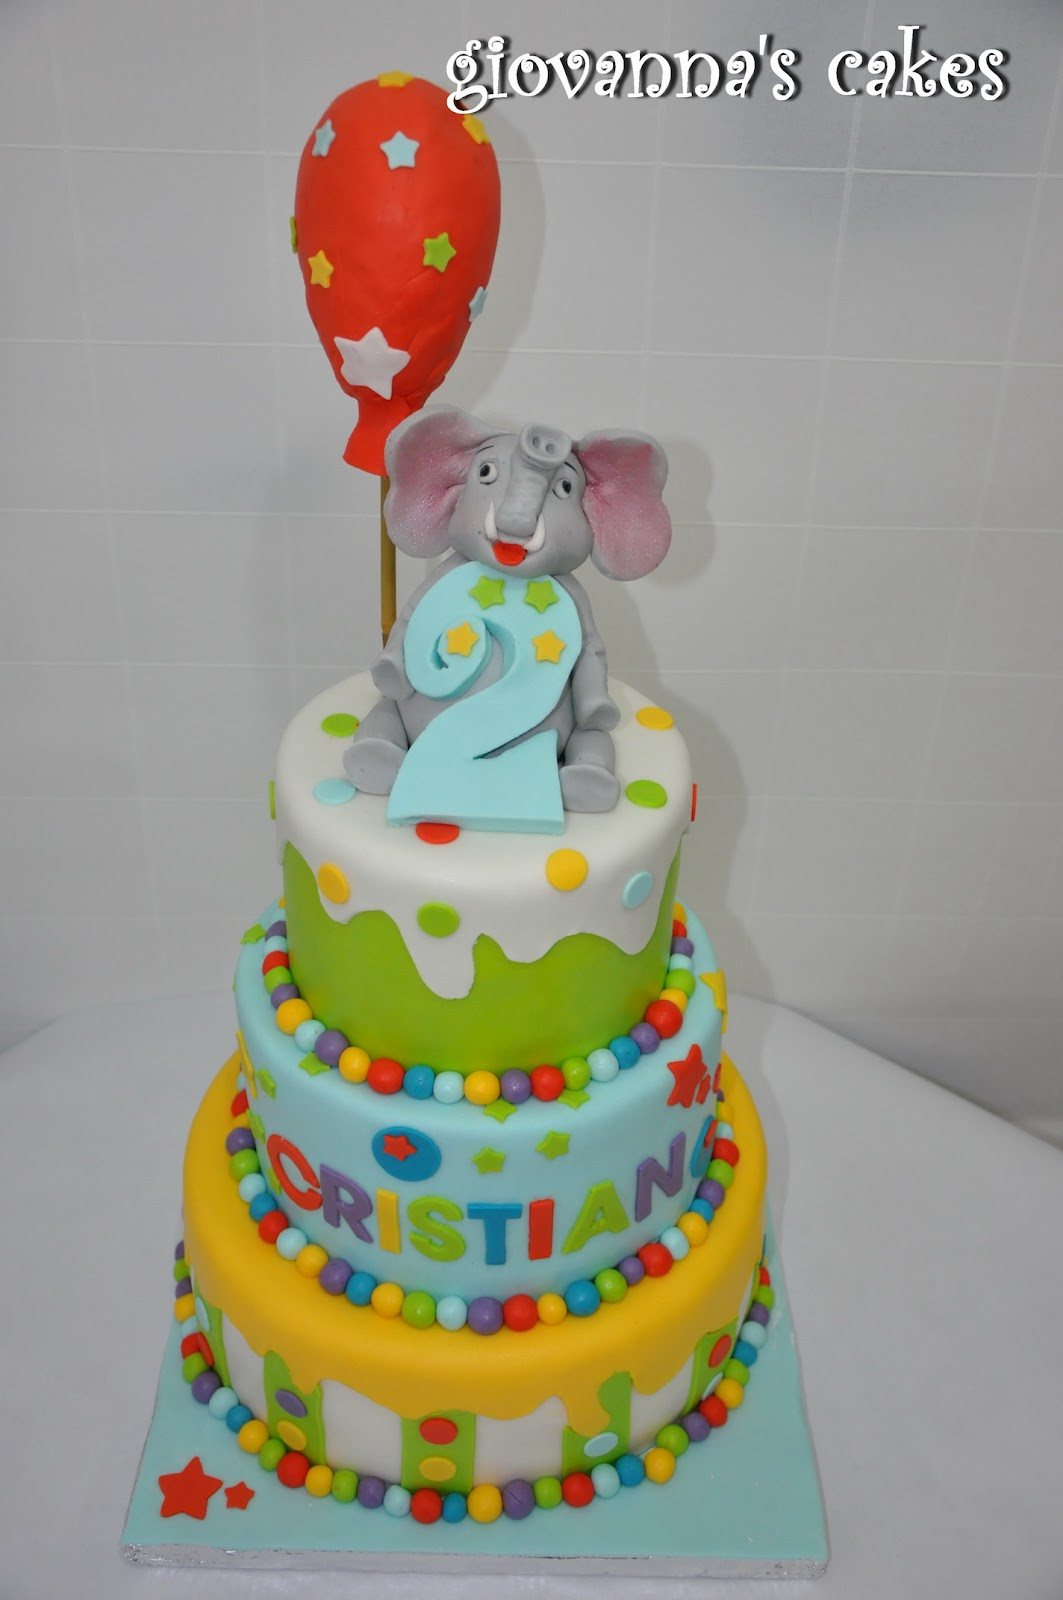 Best ideas about Elephant Birthday Cake
. Save or Pin giovanna s cakes Cristian s elephant birthday cake Now.